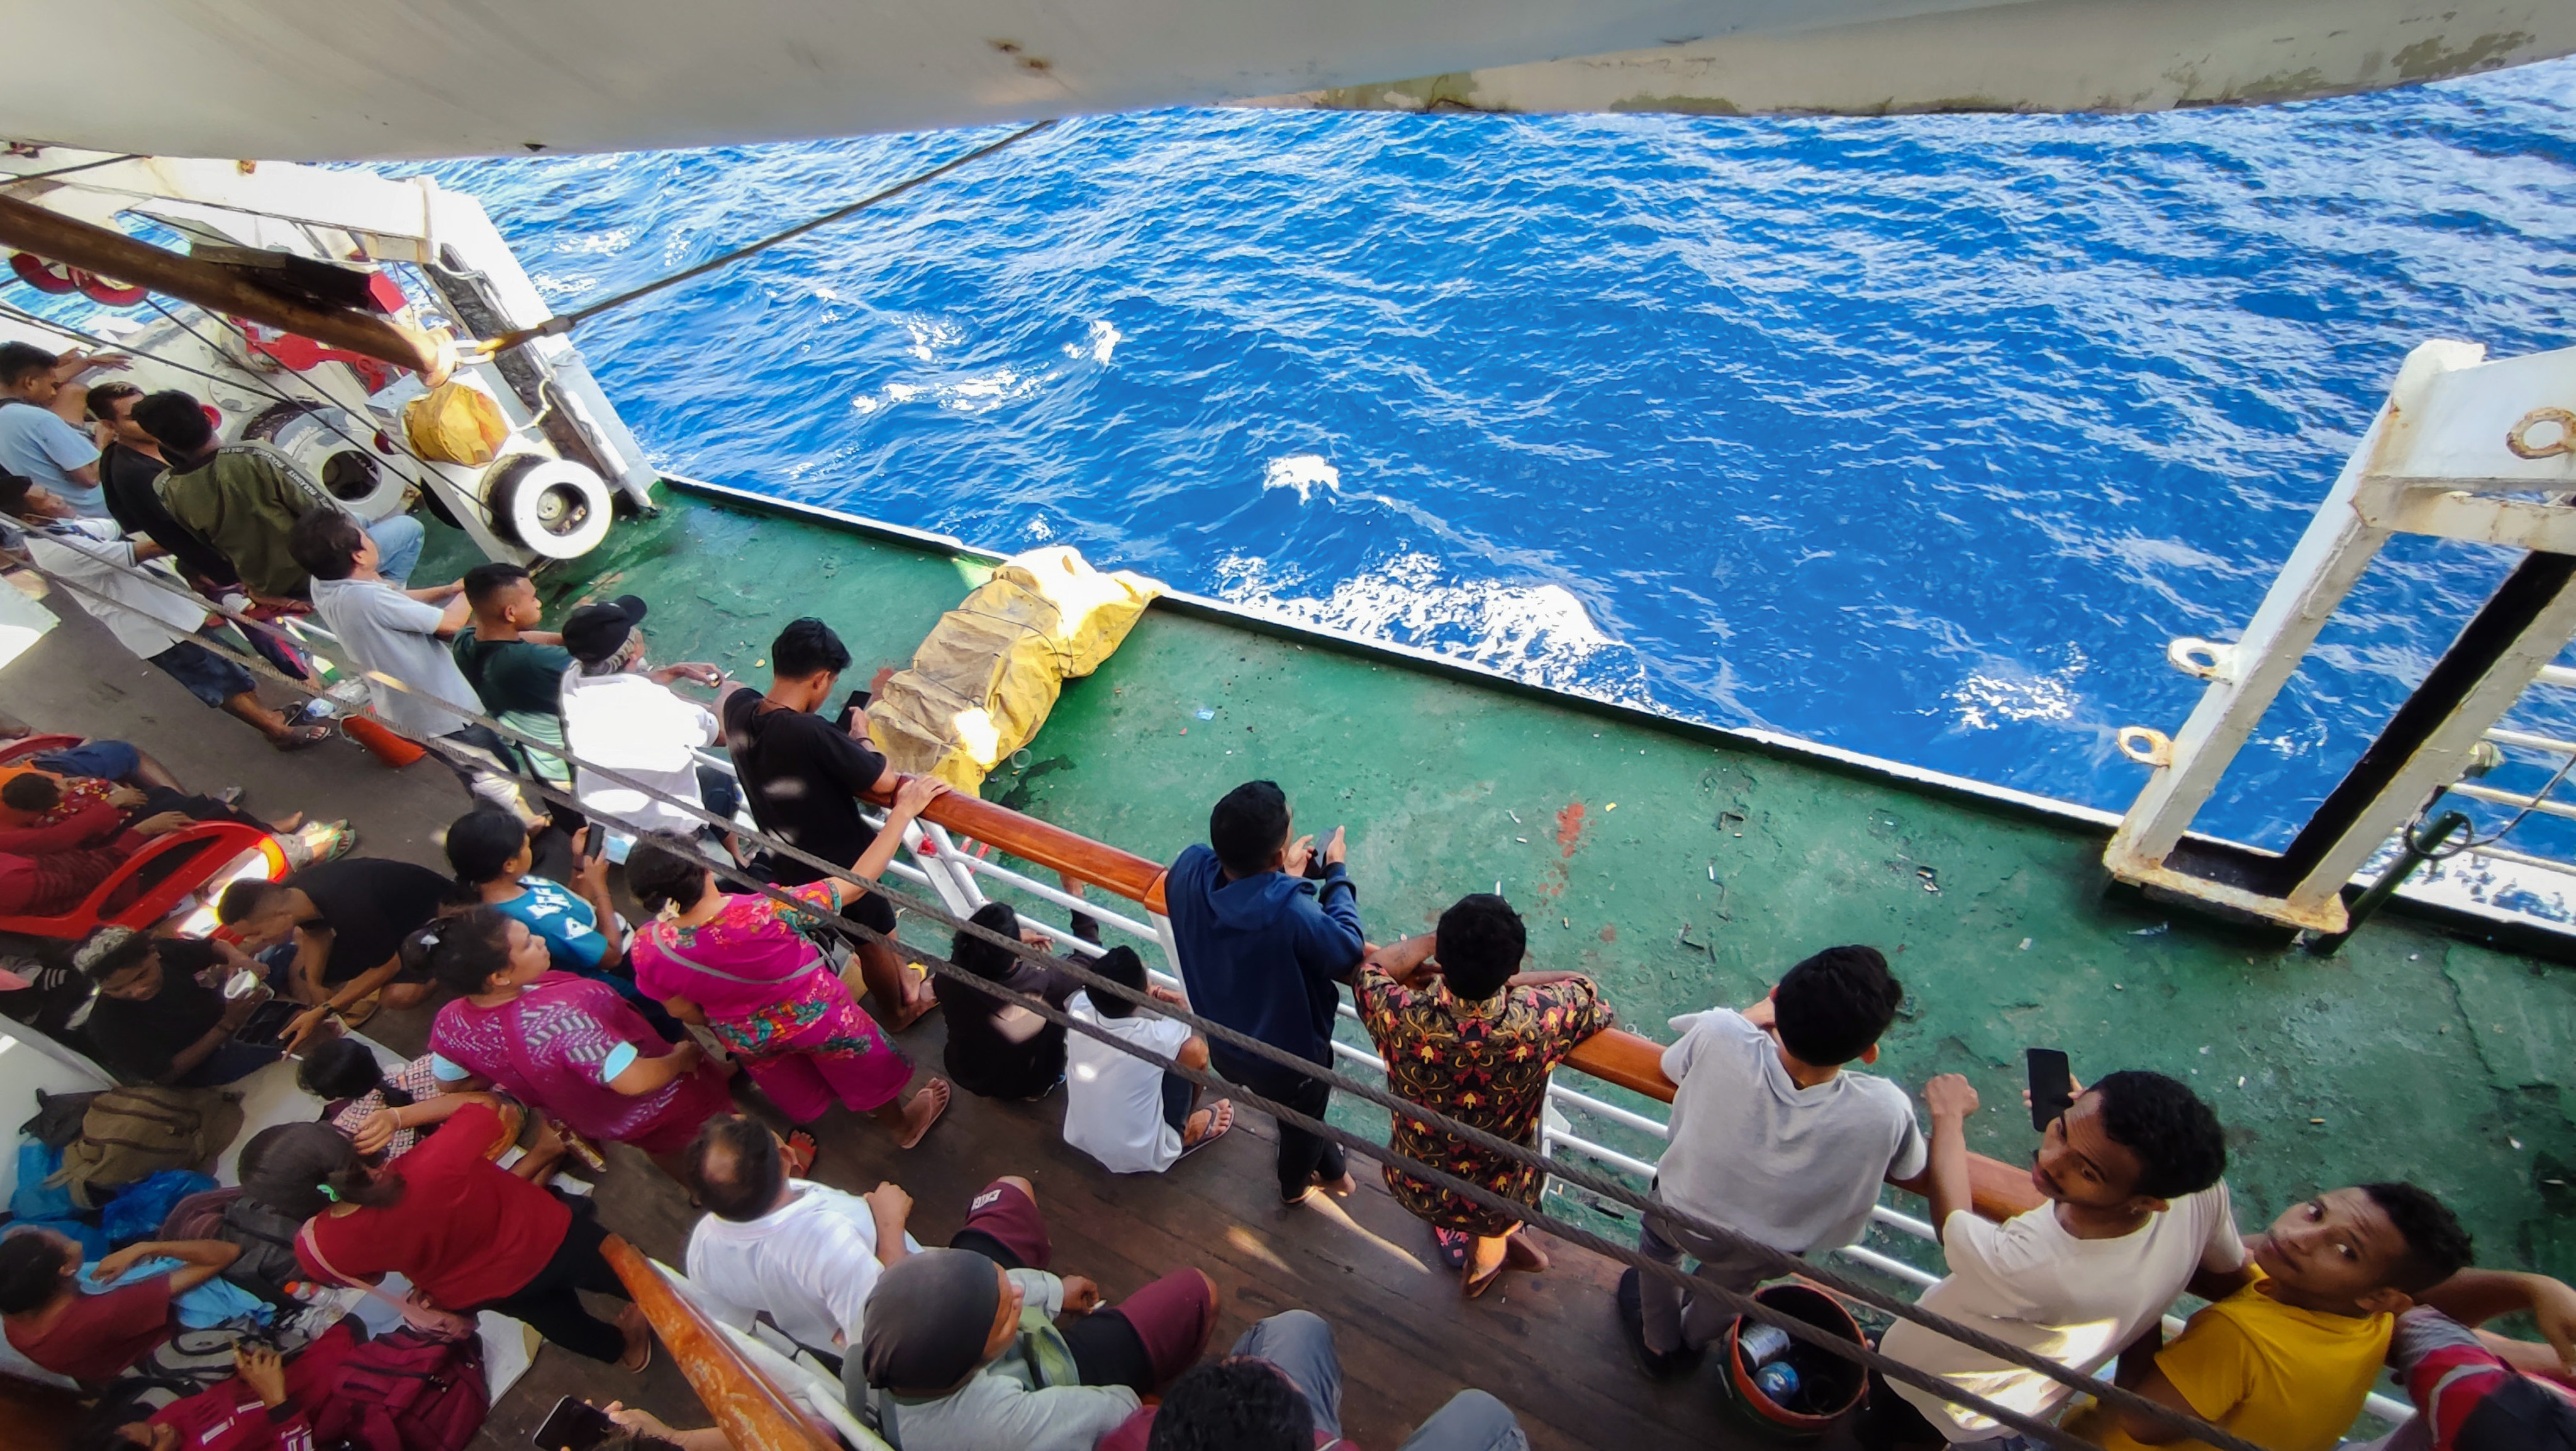 Passengers on the deck of the Kapal Awu. Photo: Chan Kit Yeng